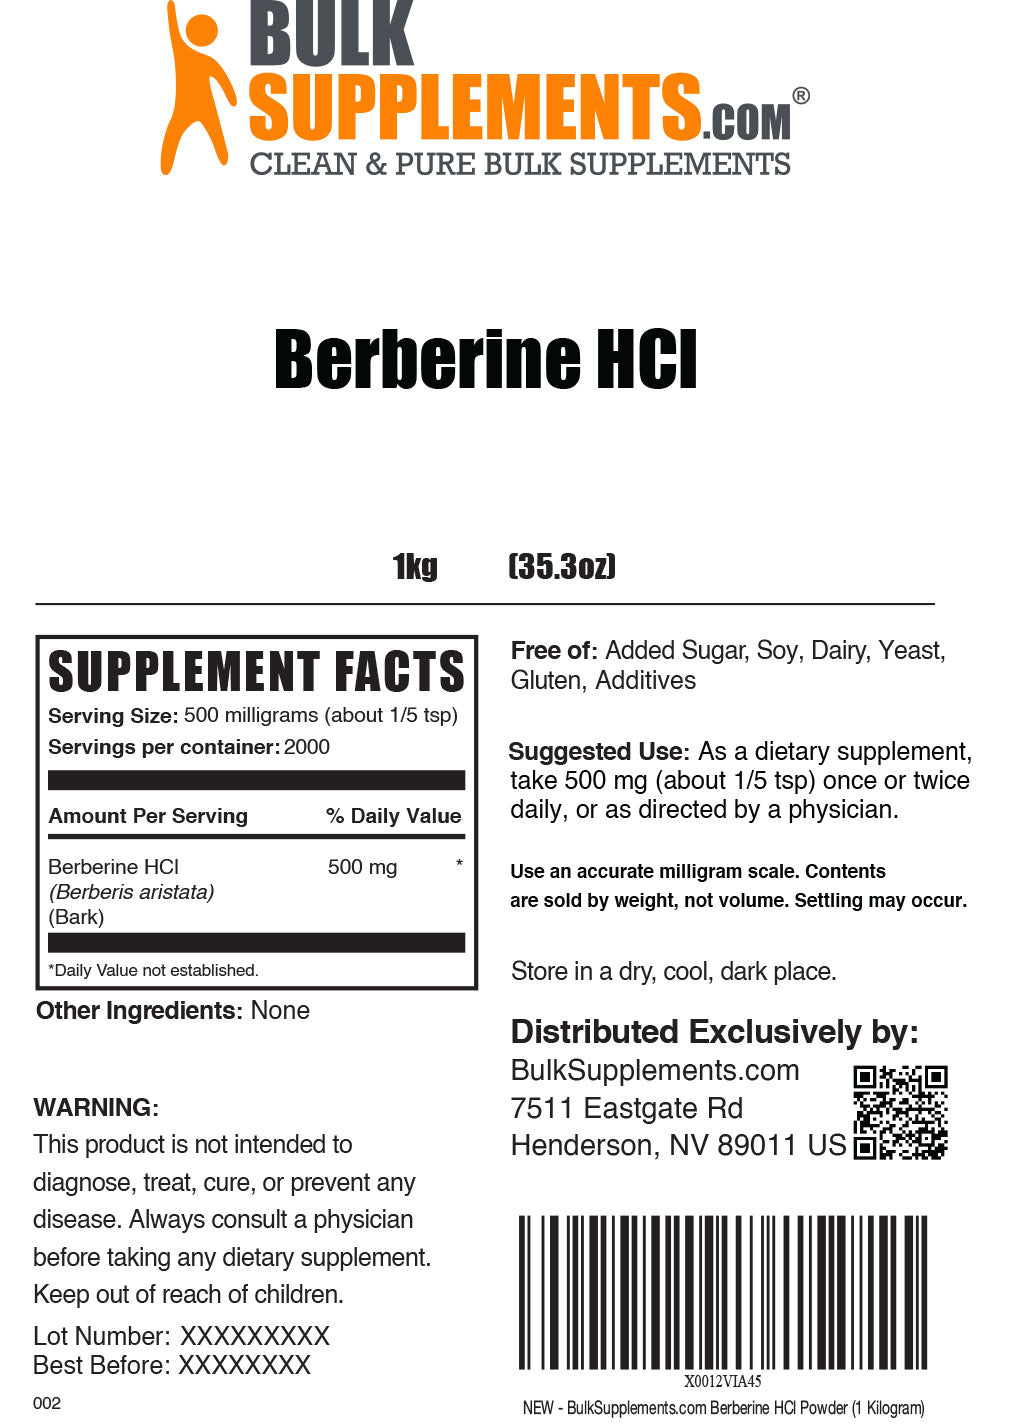 Berberine HCl Supplement Facts 1kg bag